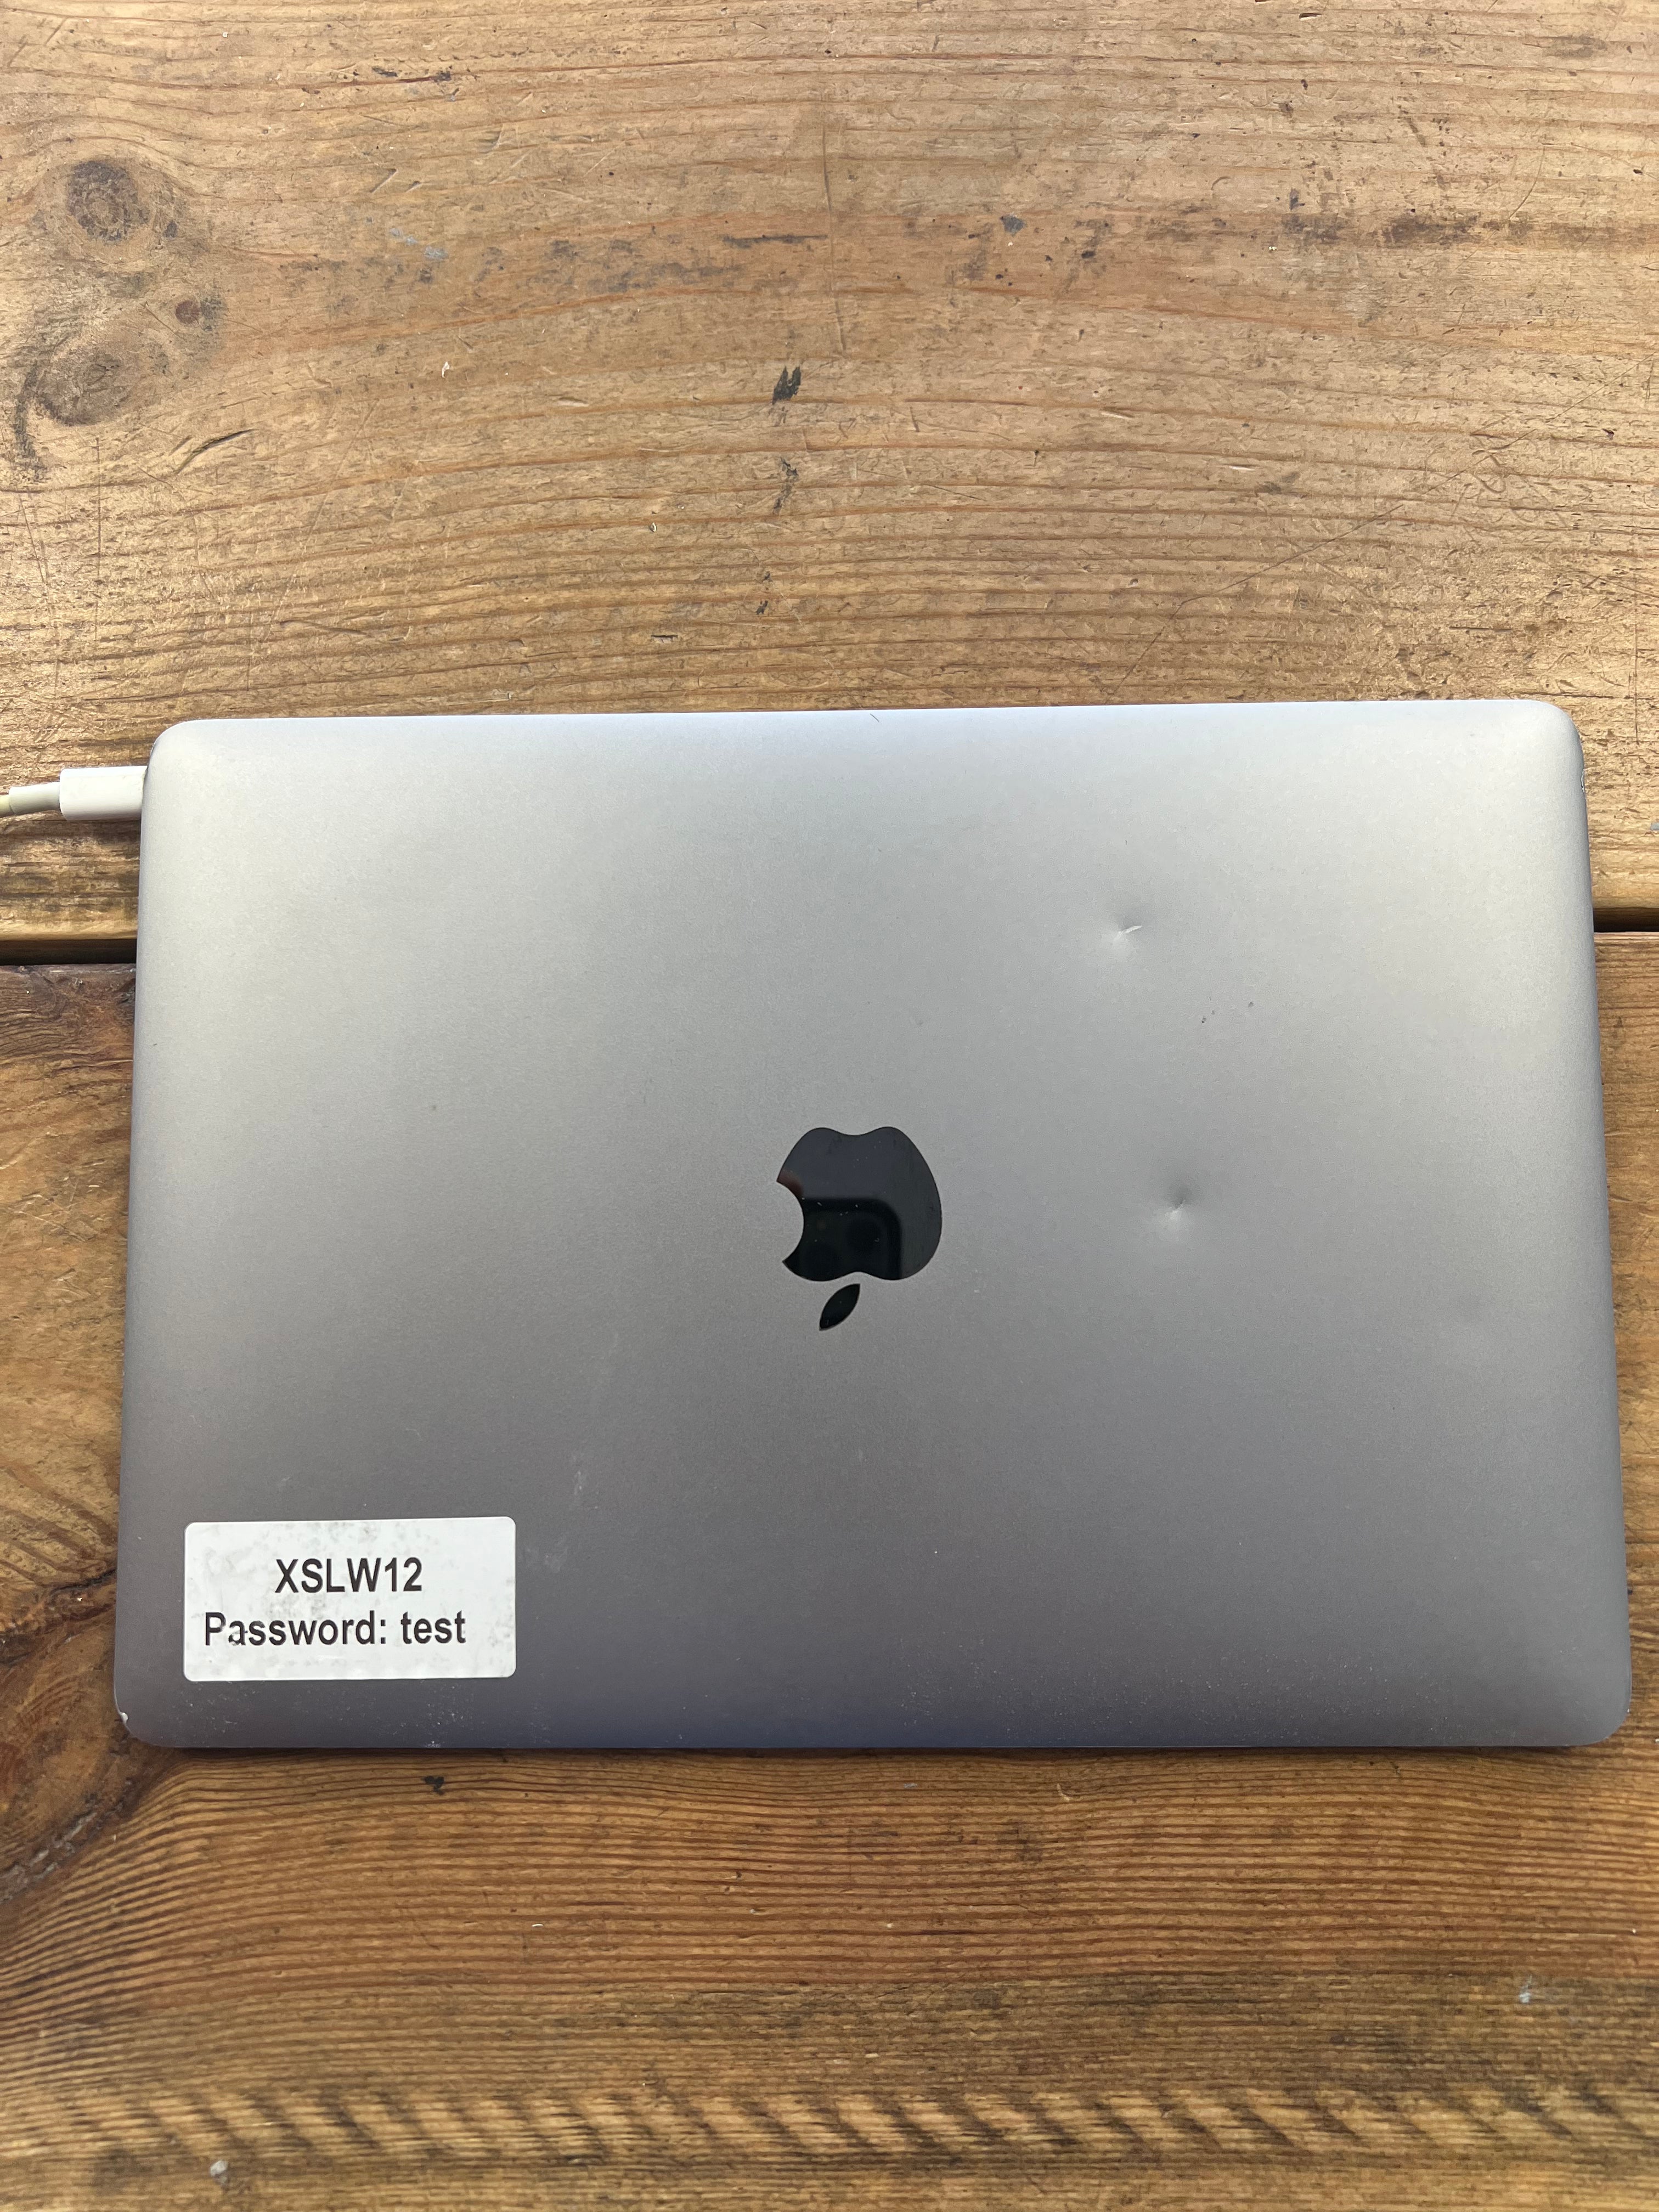 Macbook 12 inch - 8GB - Retina - Space Grey